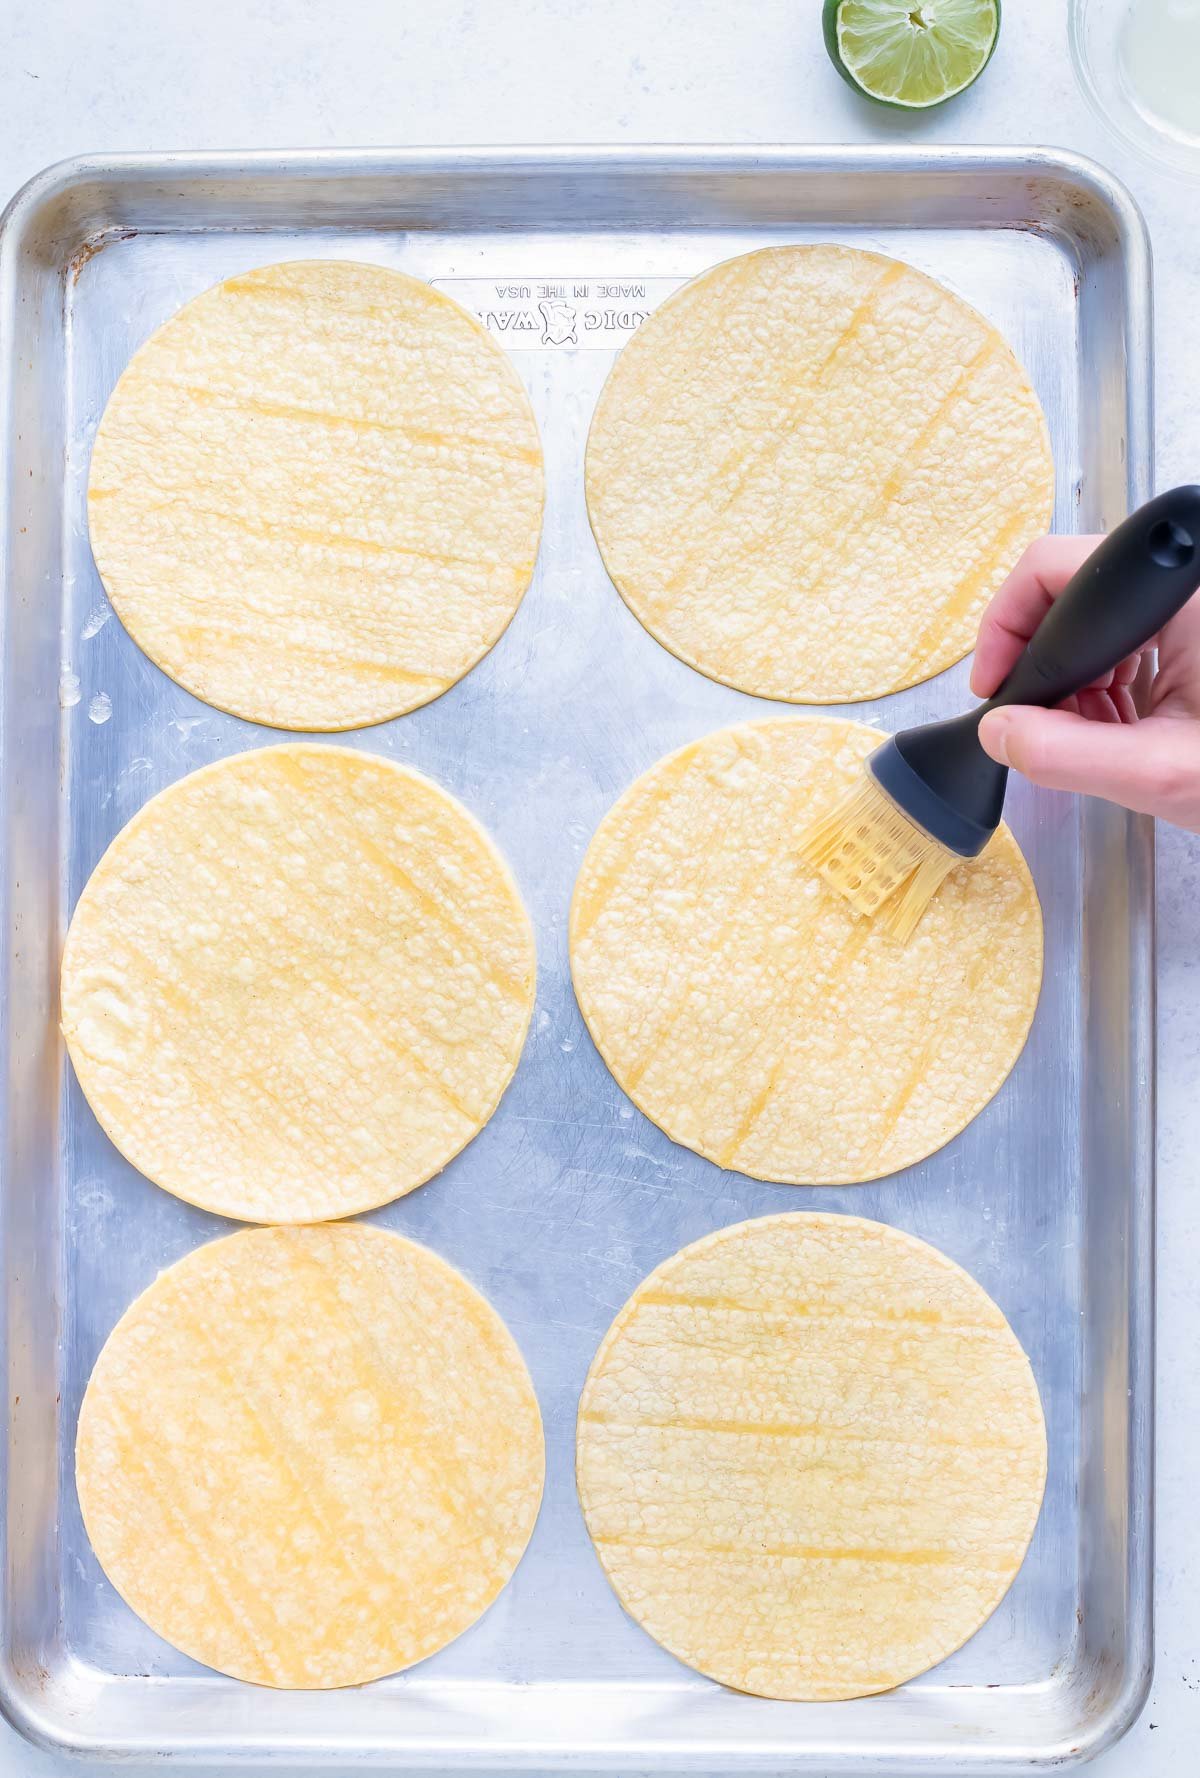 Corn tortillas are baked until crispy.